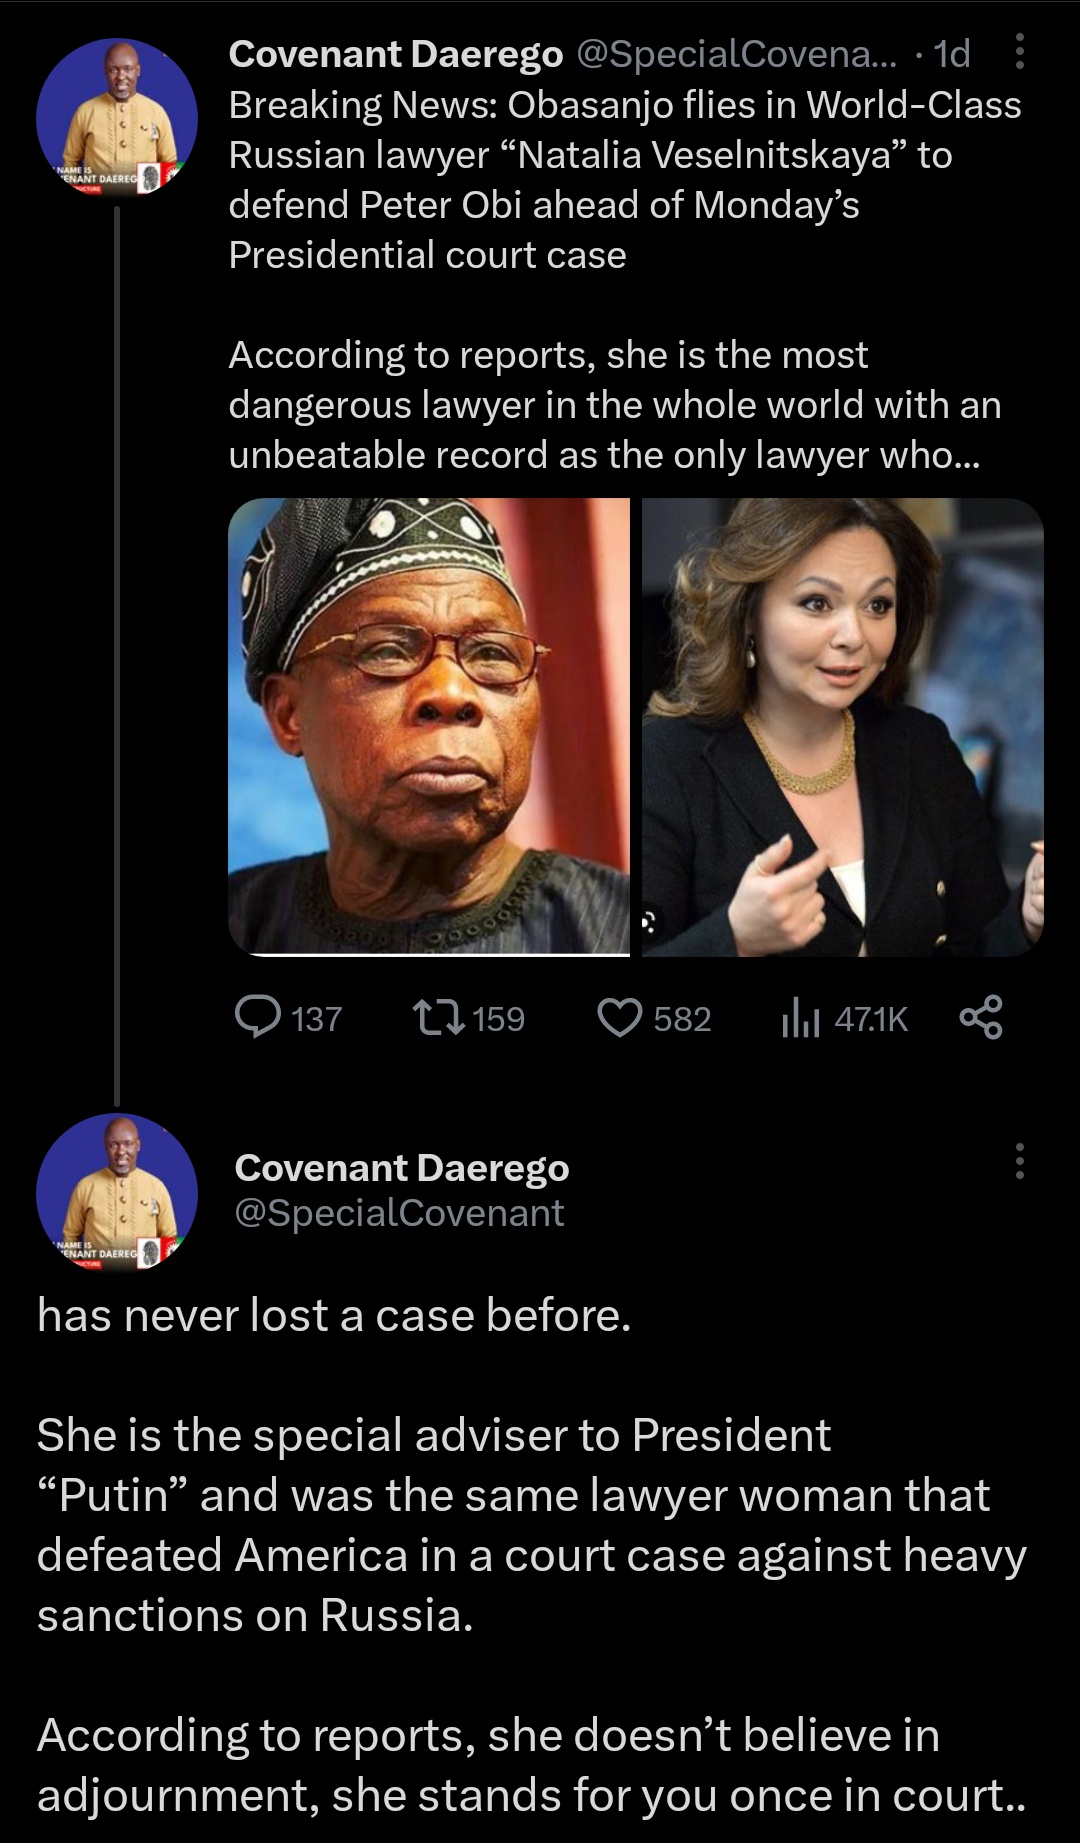 Twitter post claim on Olusegun Obasanjo, Peter Obi and Natalia Veselnitskaya